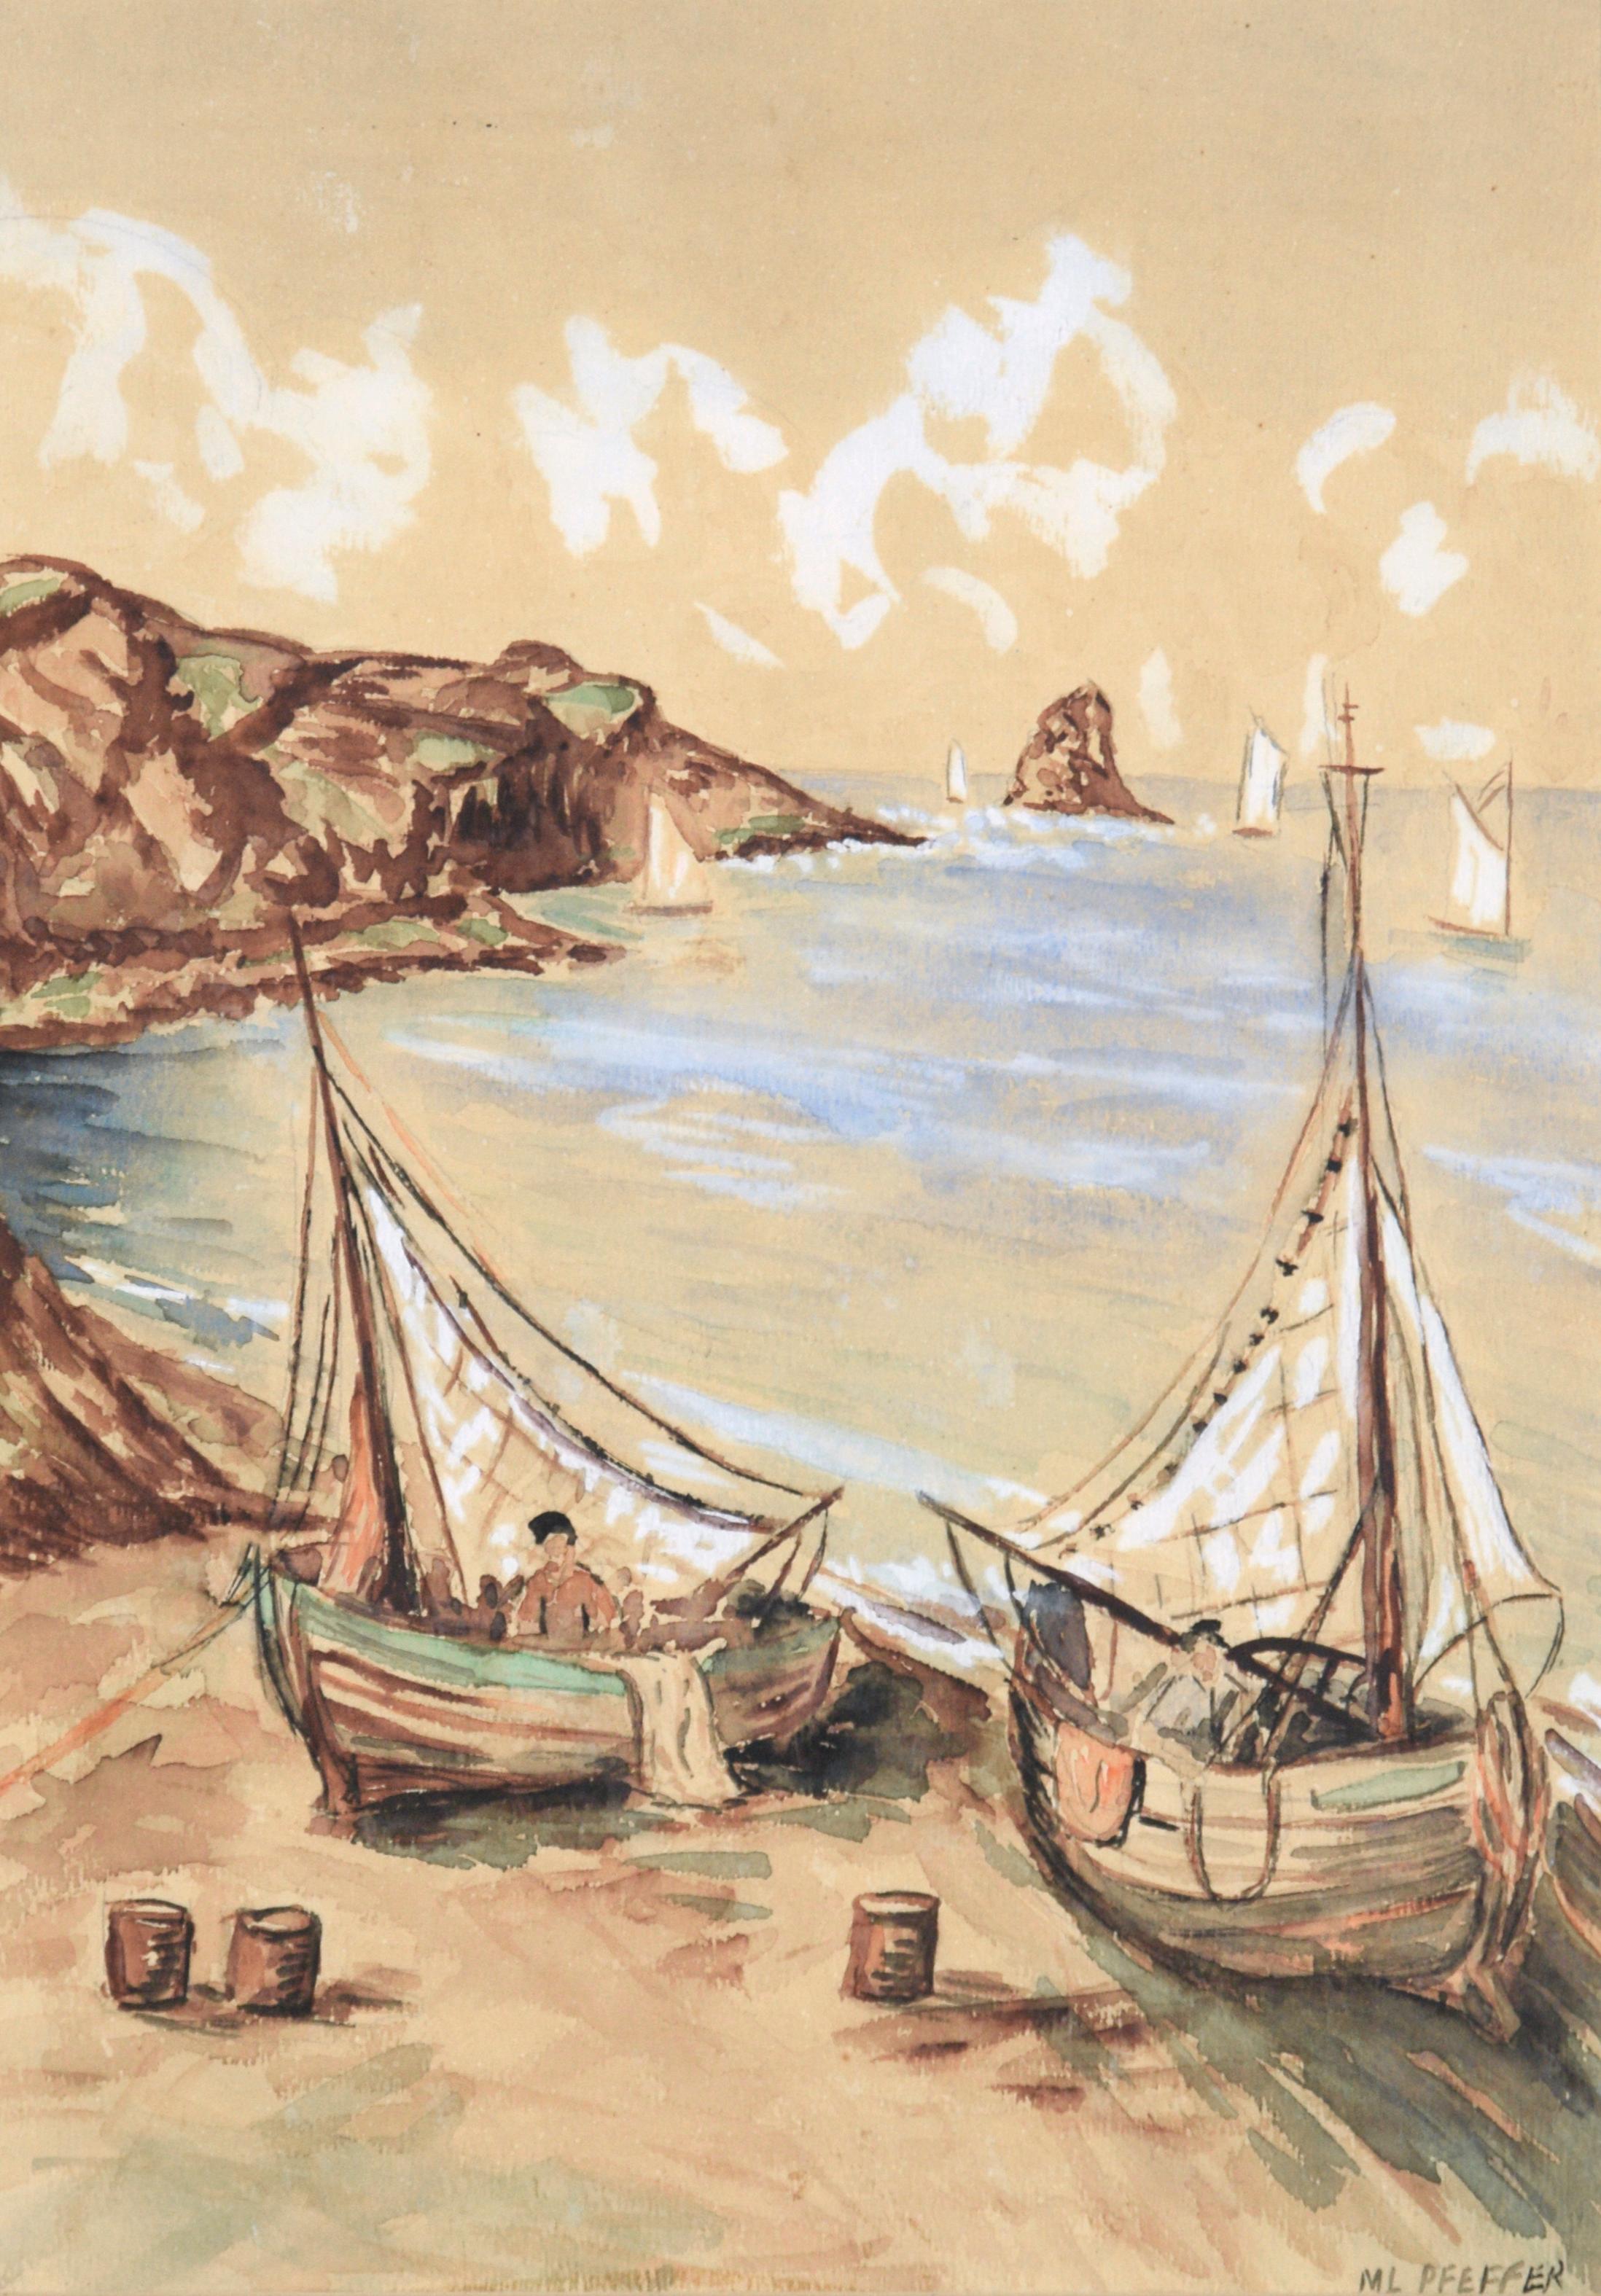 Sailboats on the Beach - Seascape - Art by M. L. Pfeffer